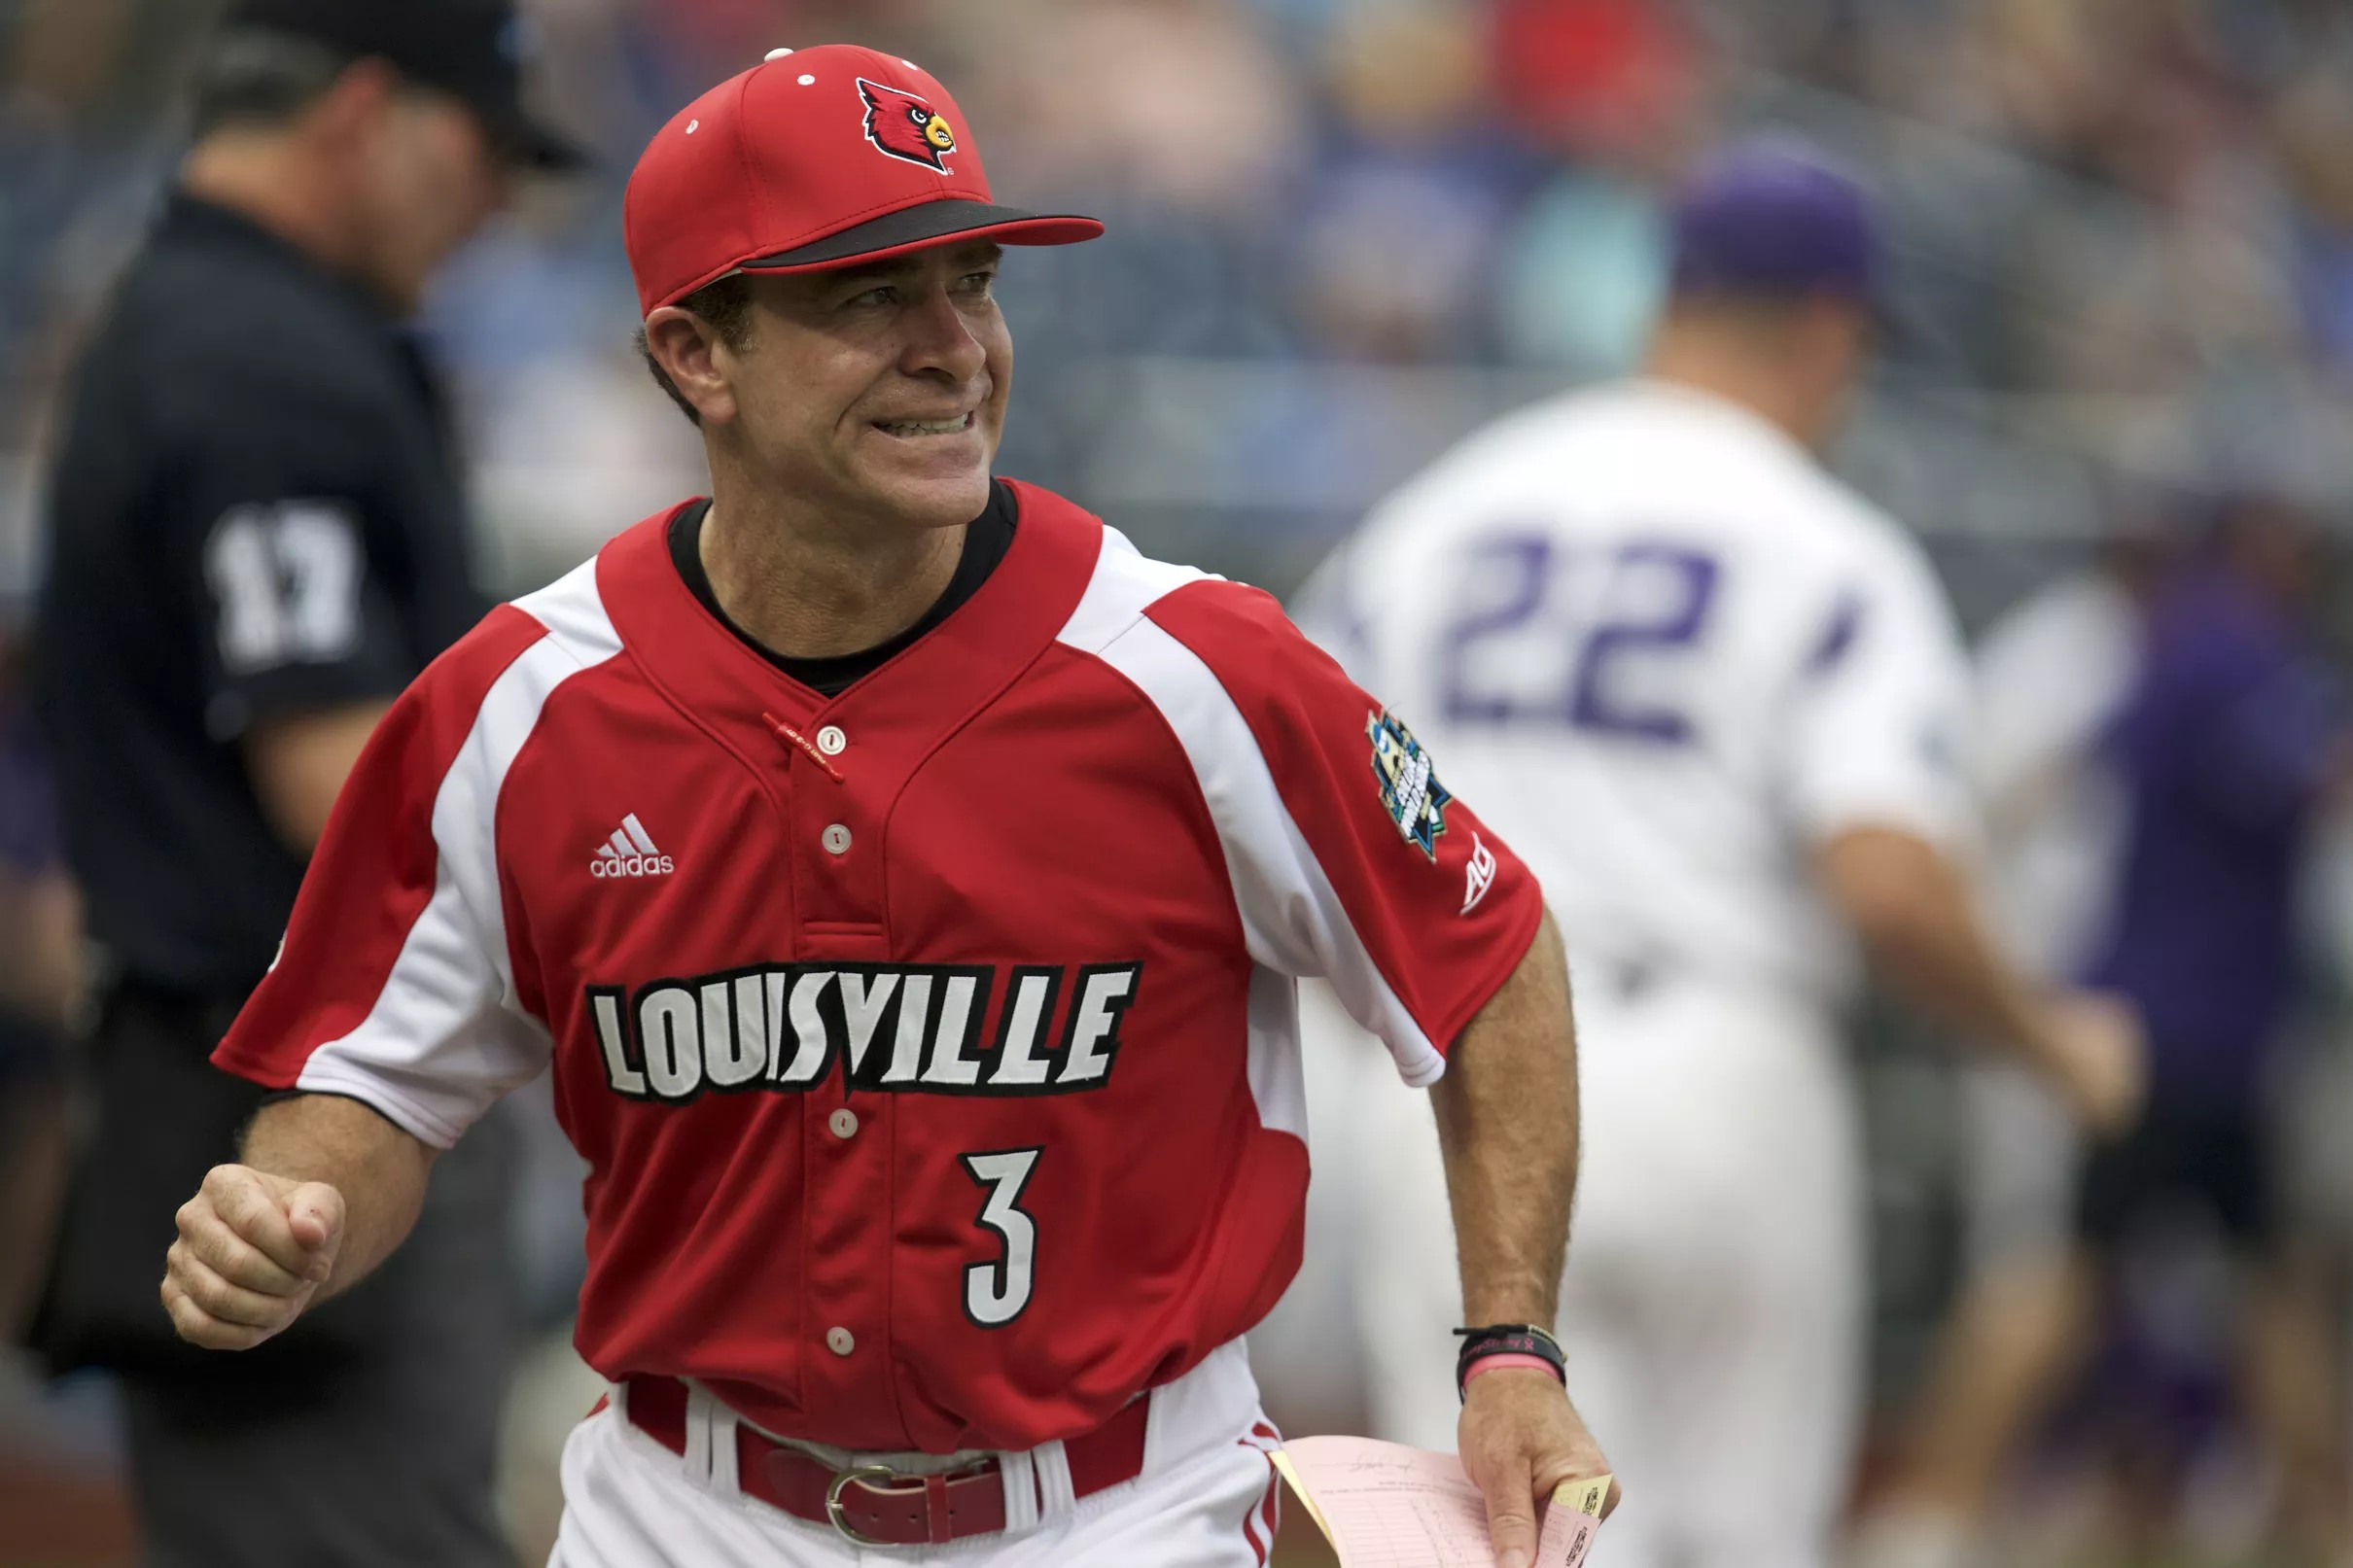 Dan McDonnell previews the 2018 Louisville baseball season